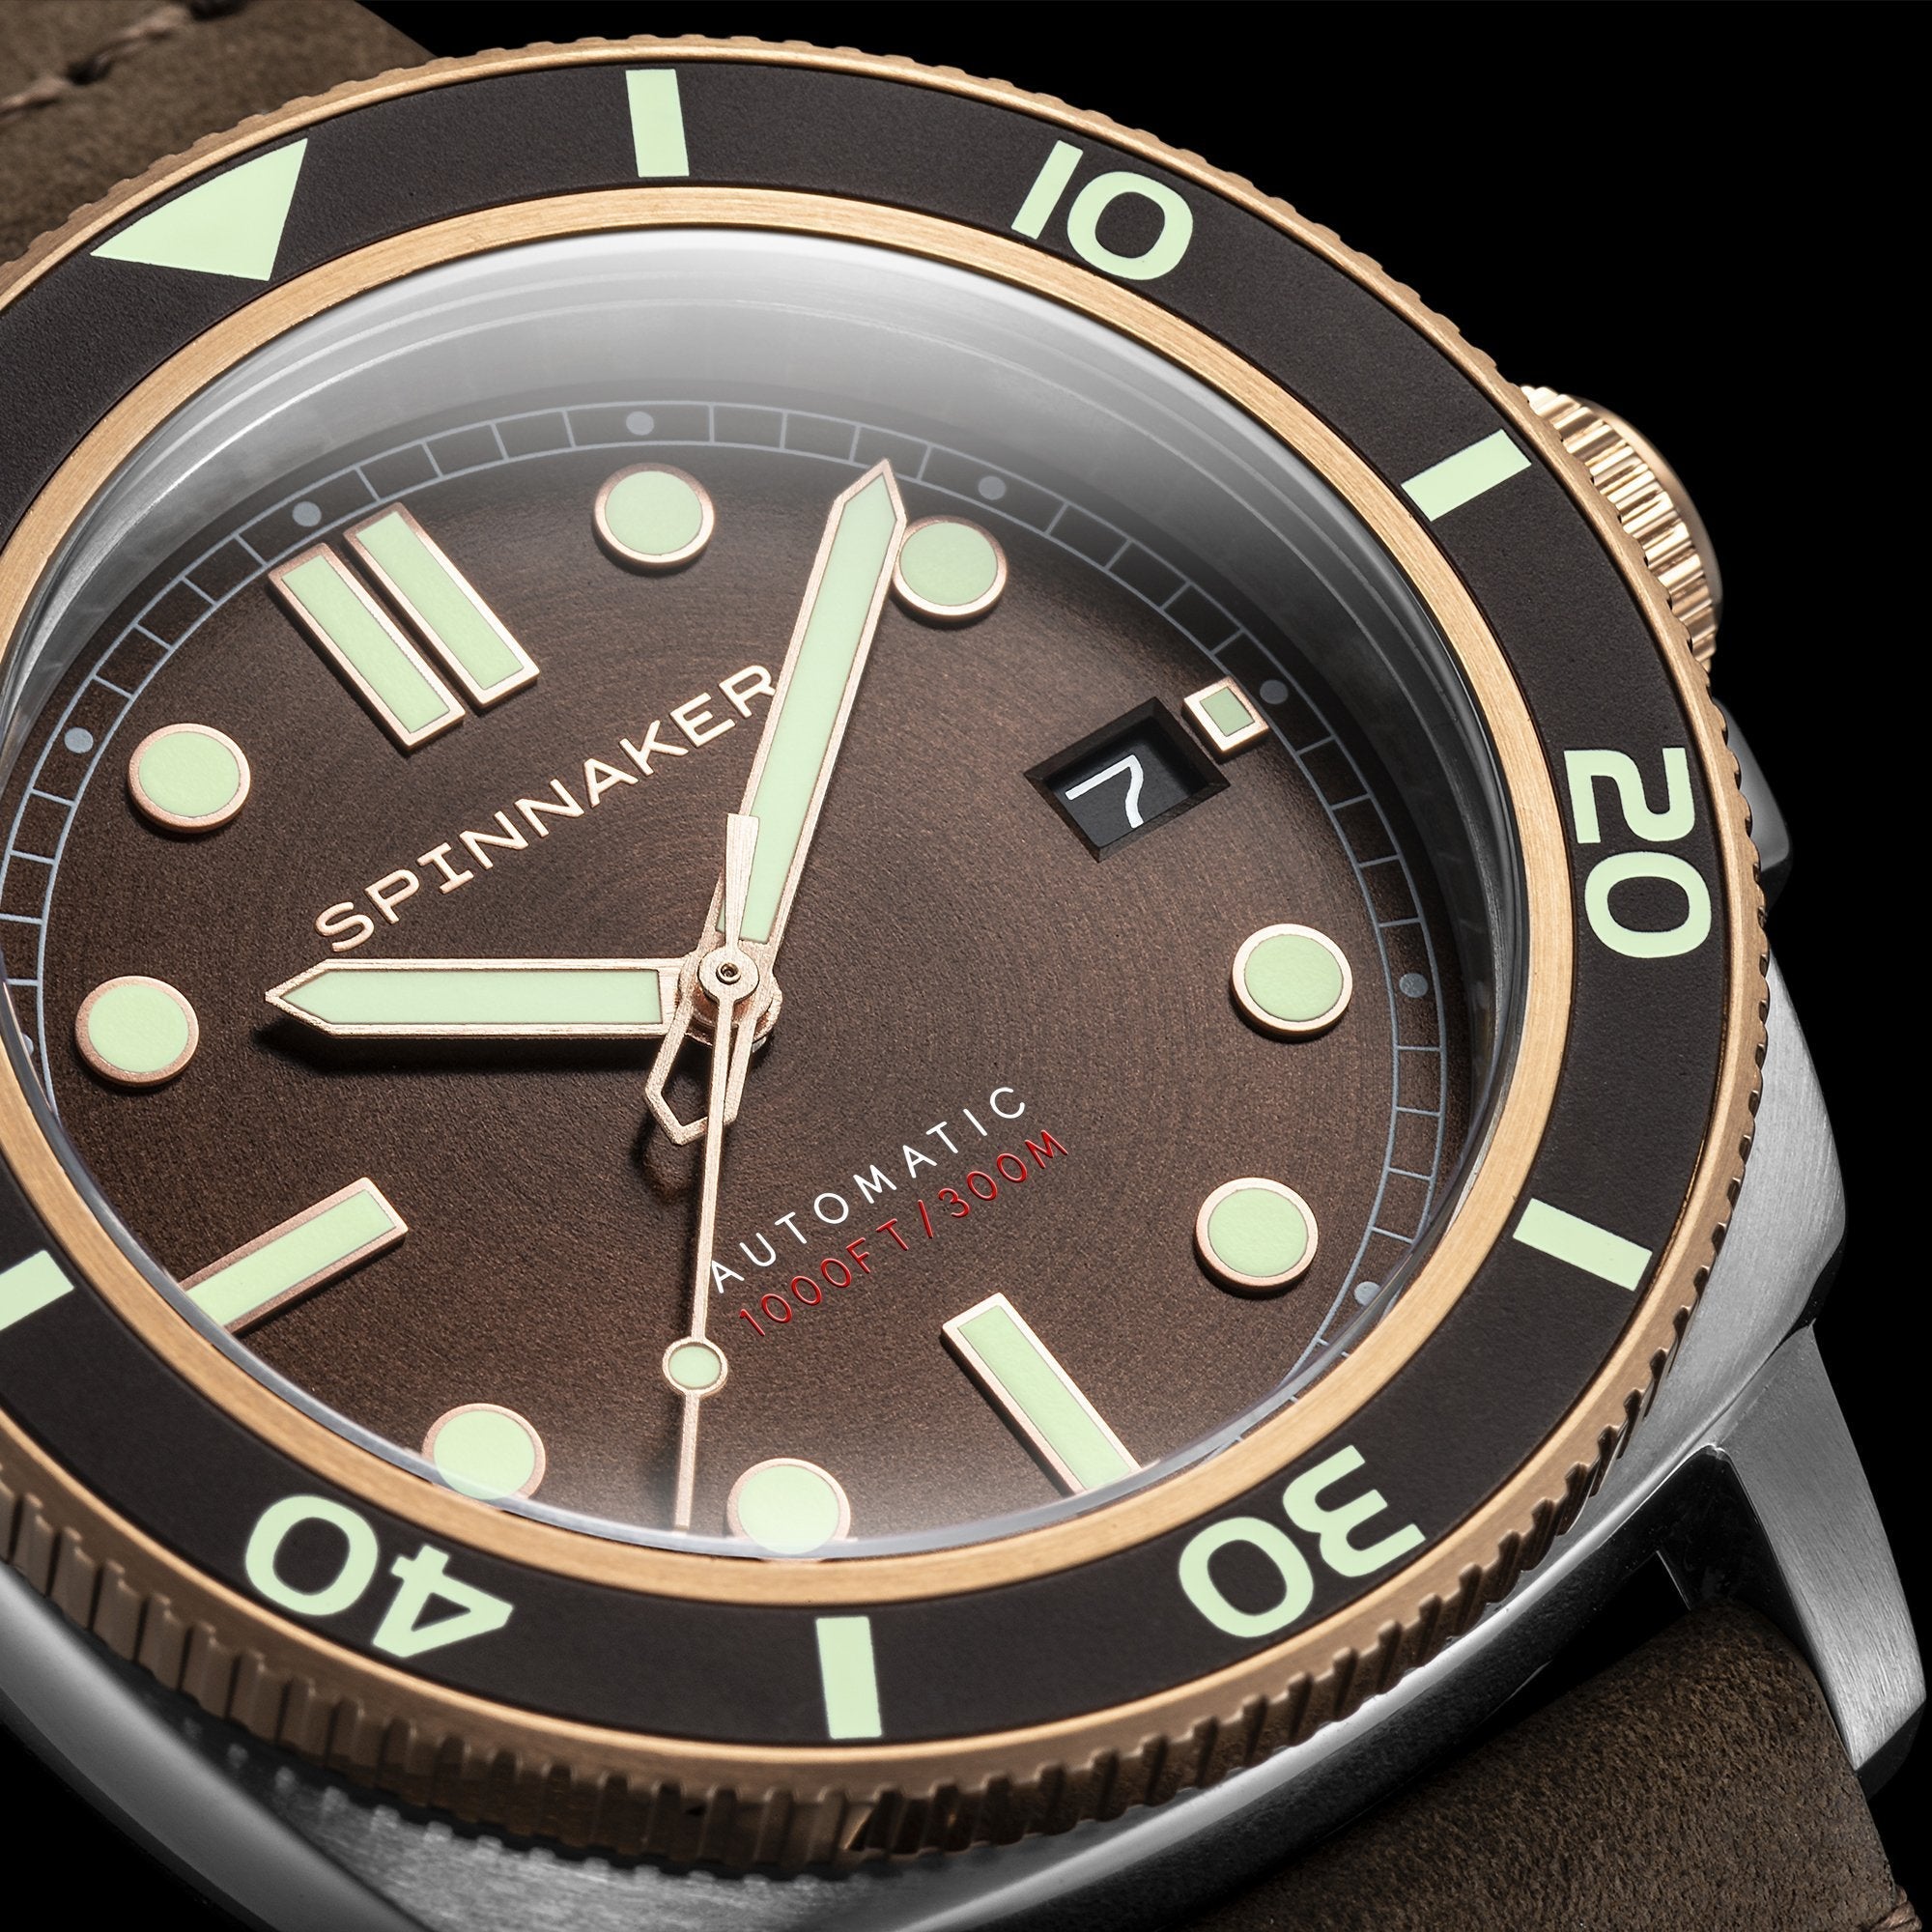 SPINNAKER Spinnaker Hull Diver Men's Automatic Cognac Brown Watch SP-5088-04